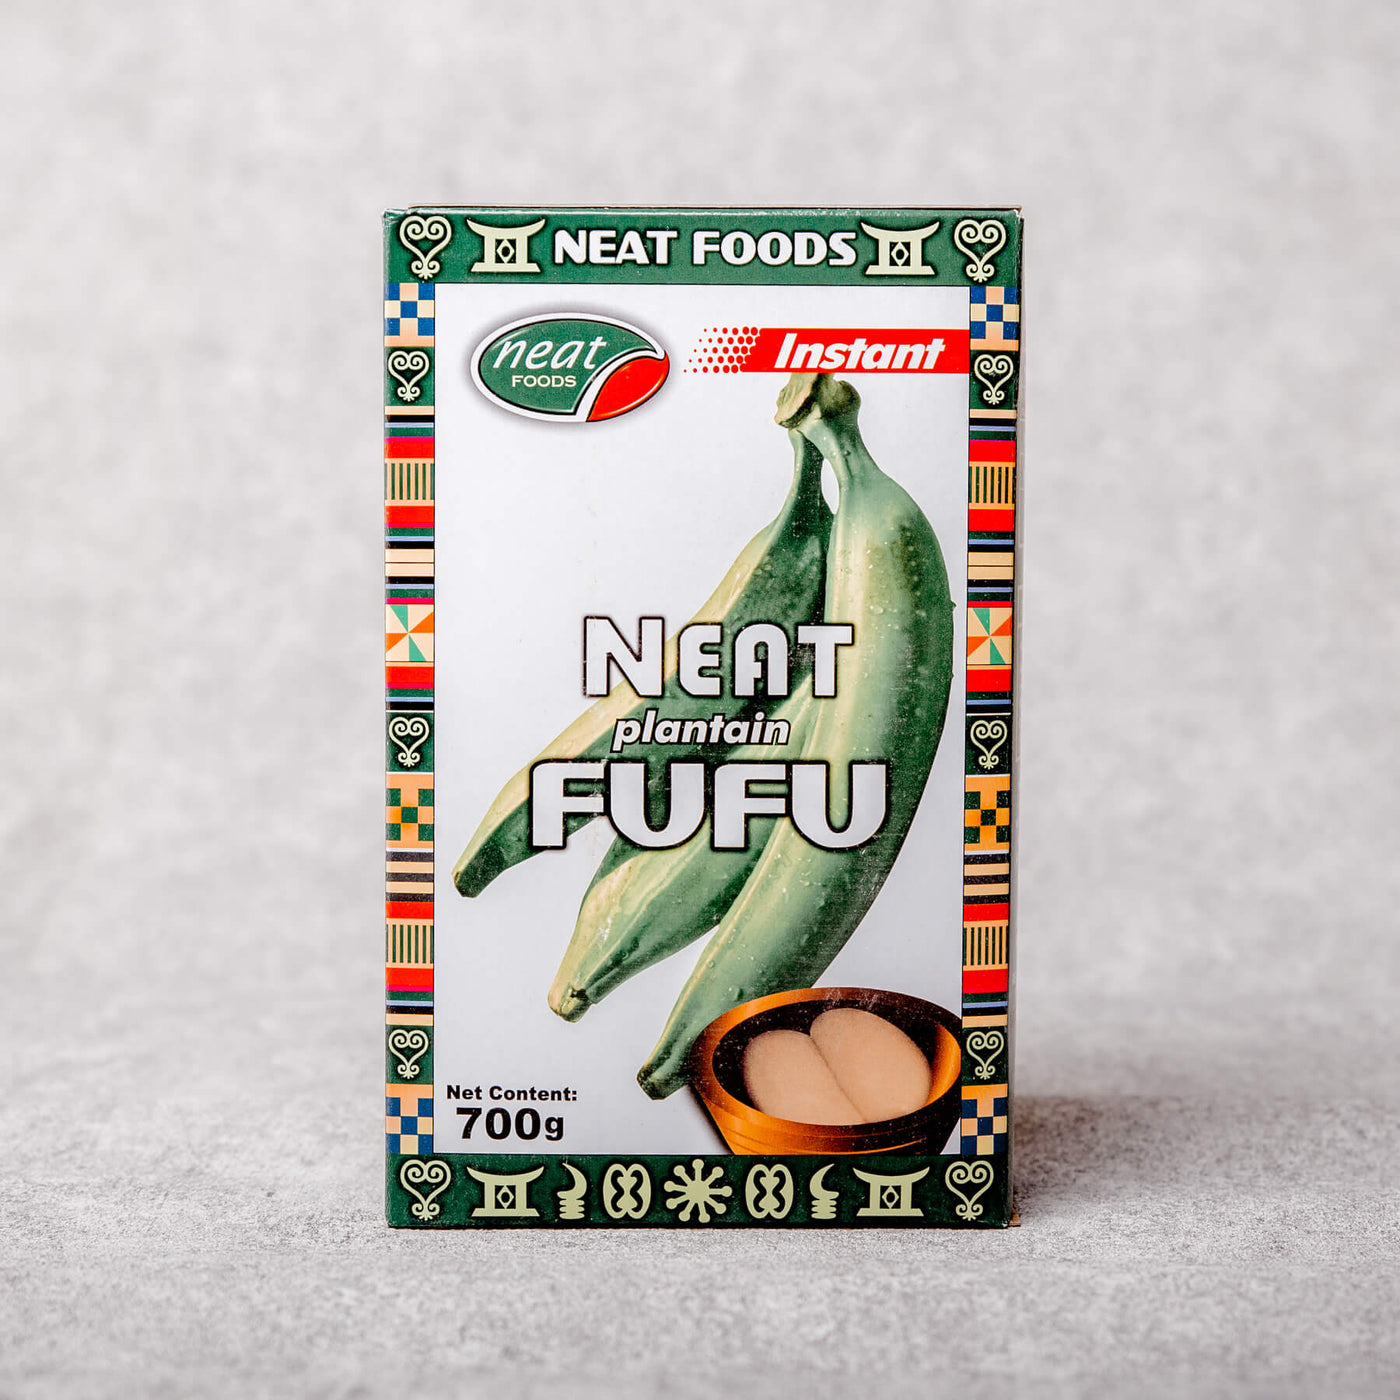 Neat - Plantain Fufu